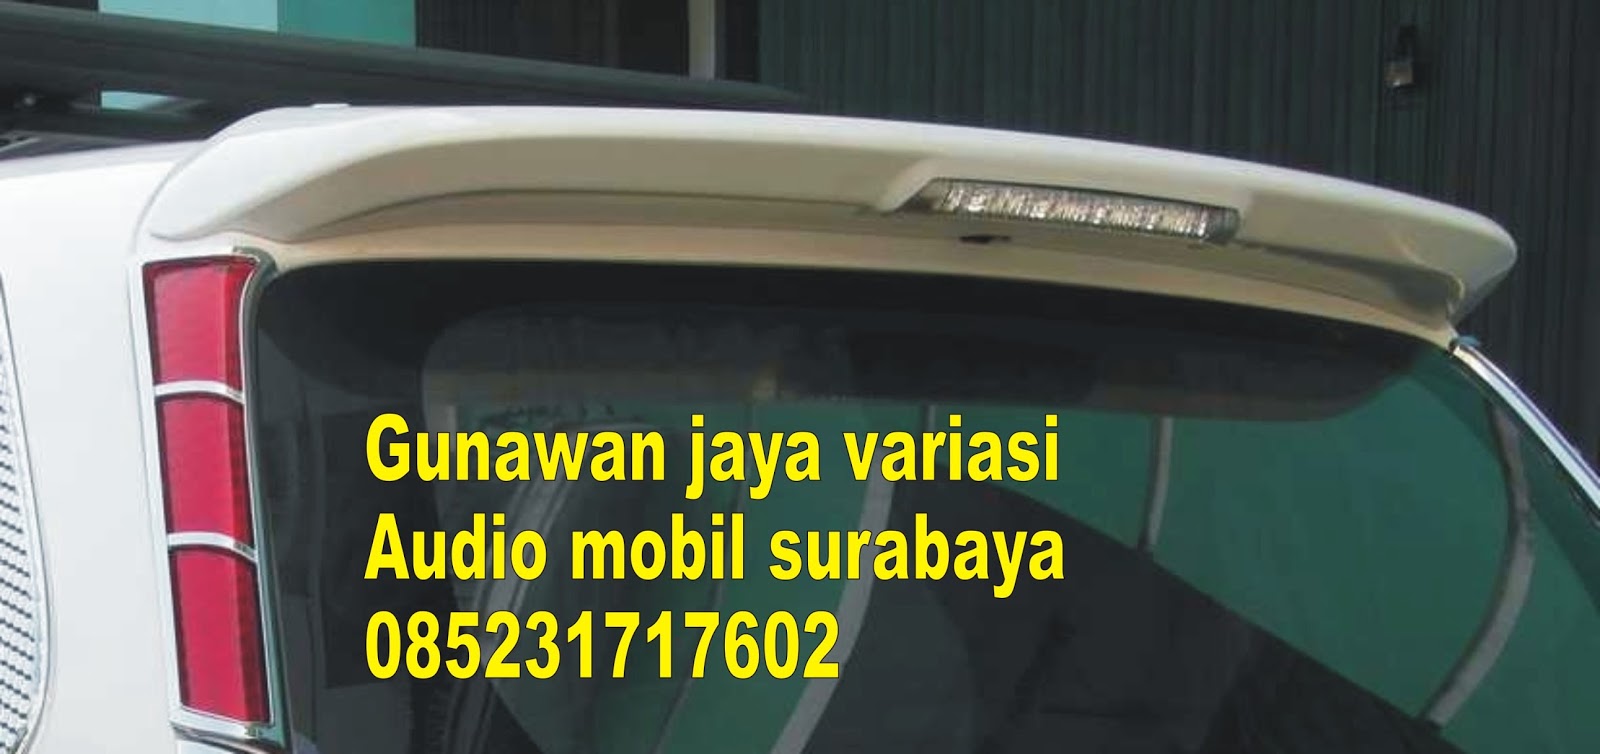 Audio Mobil Surabaya Variasi Mobil Avanza 085231717602